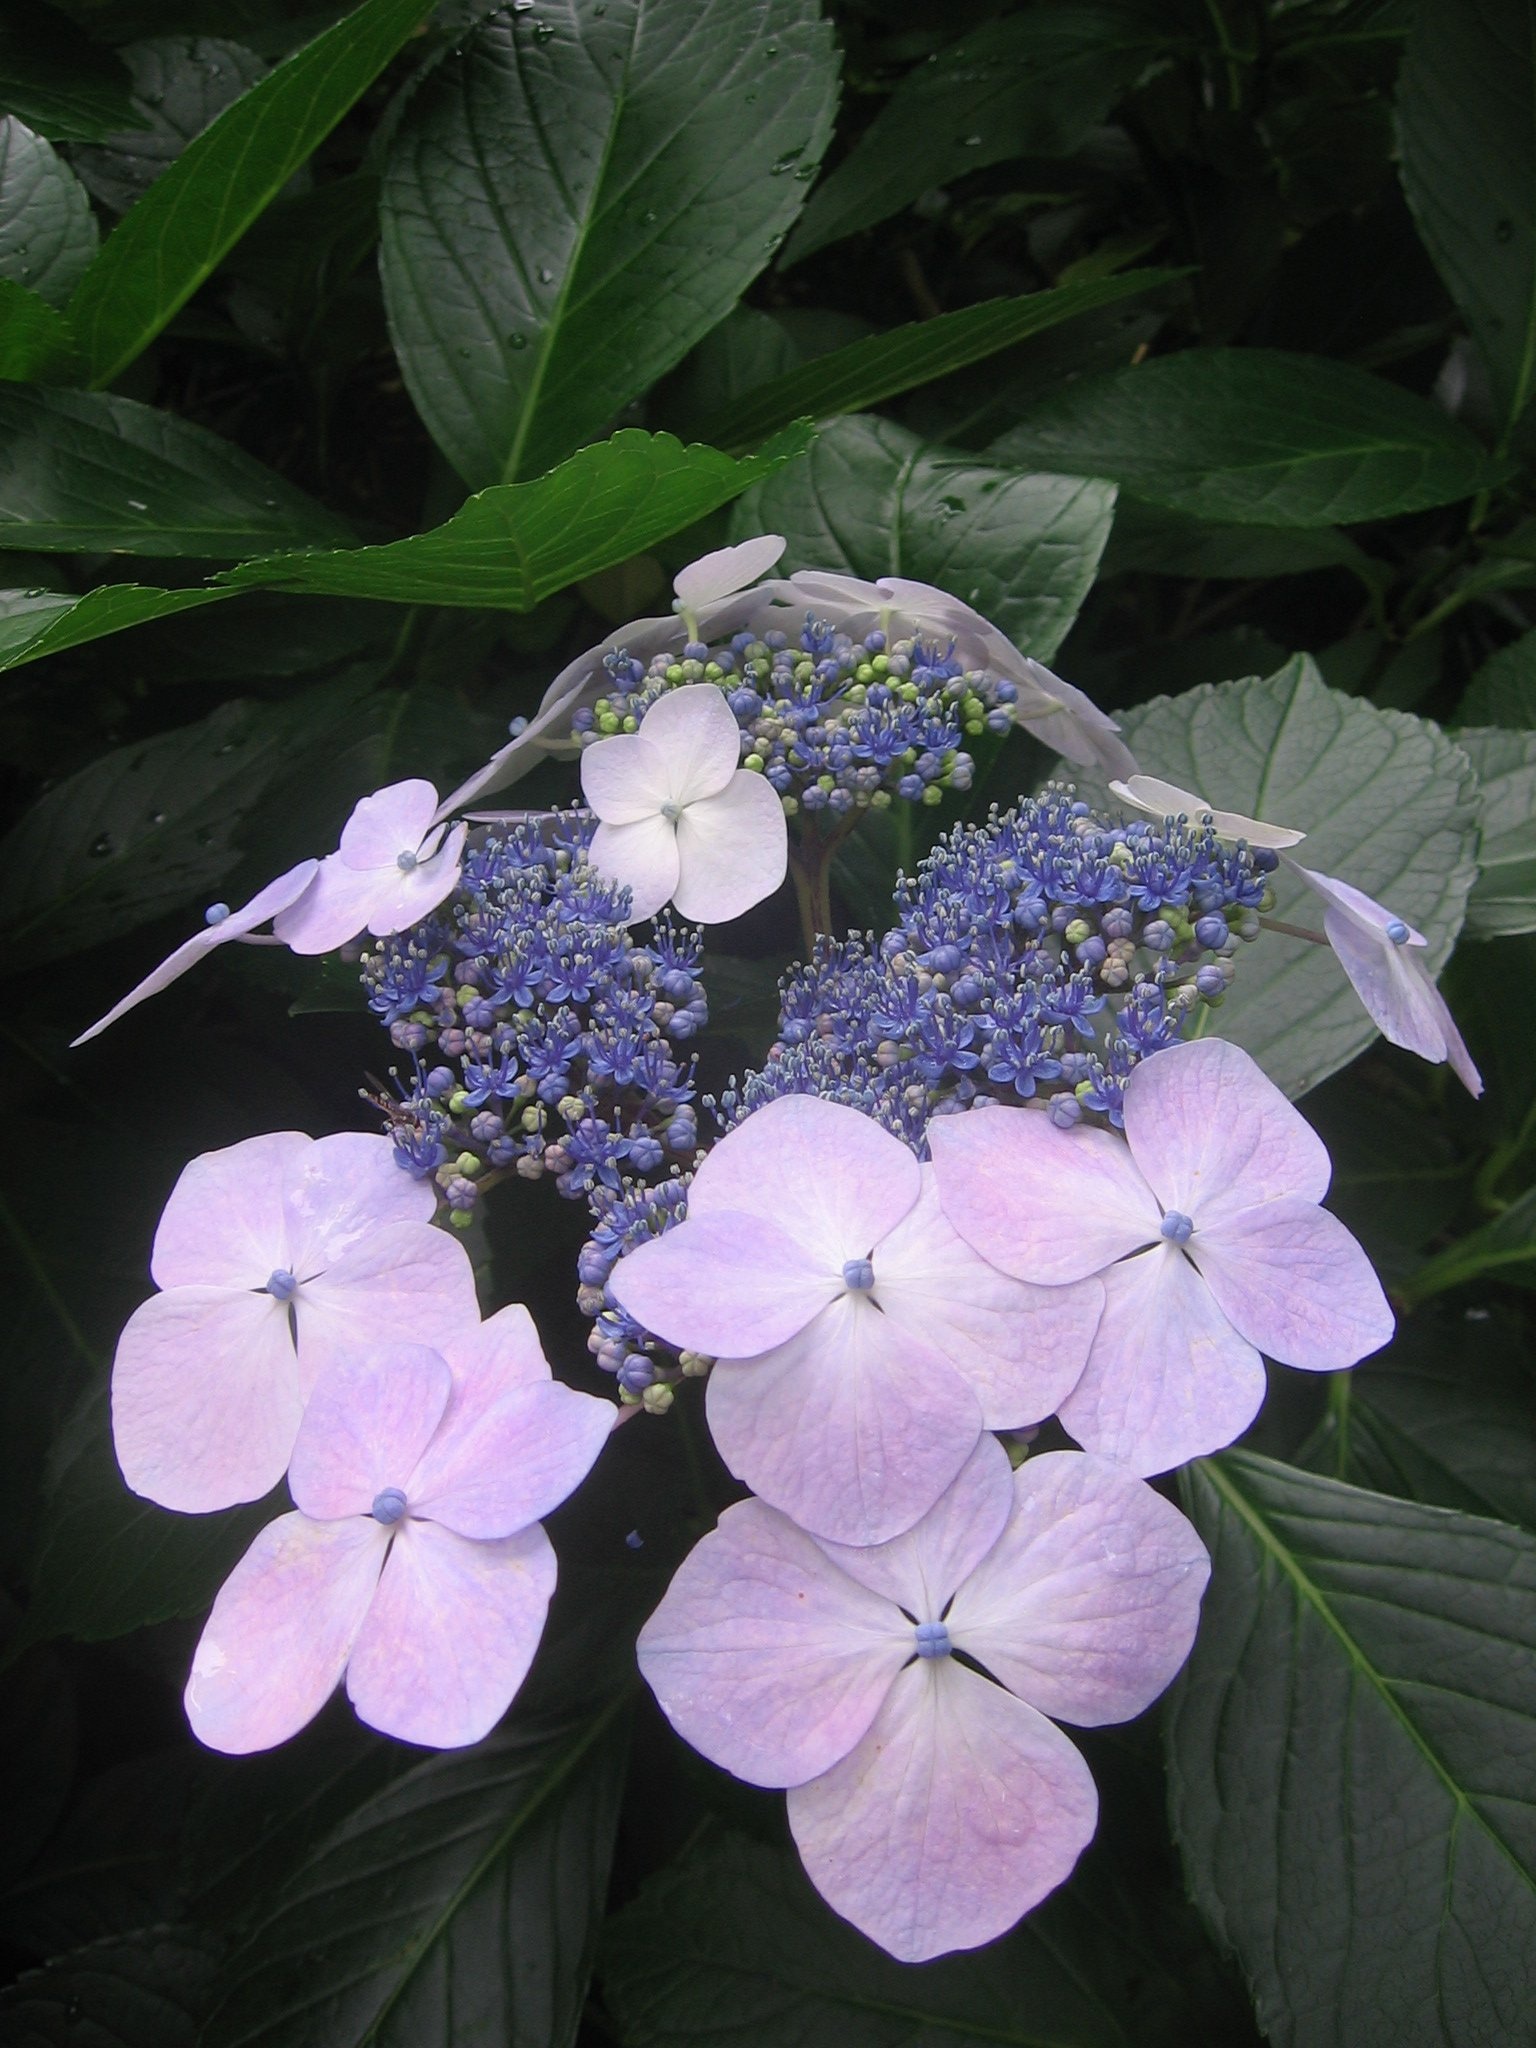 purple petaled flowers and flower buds